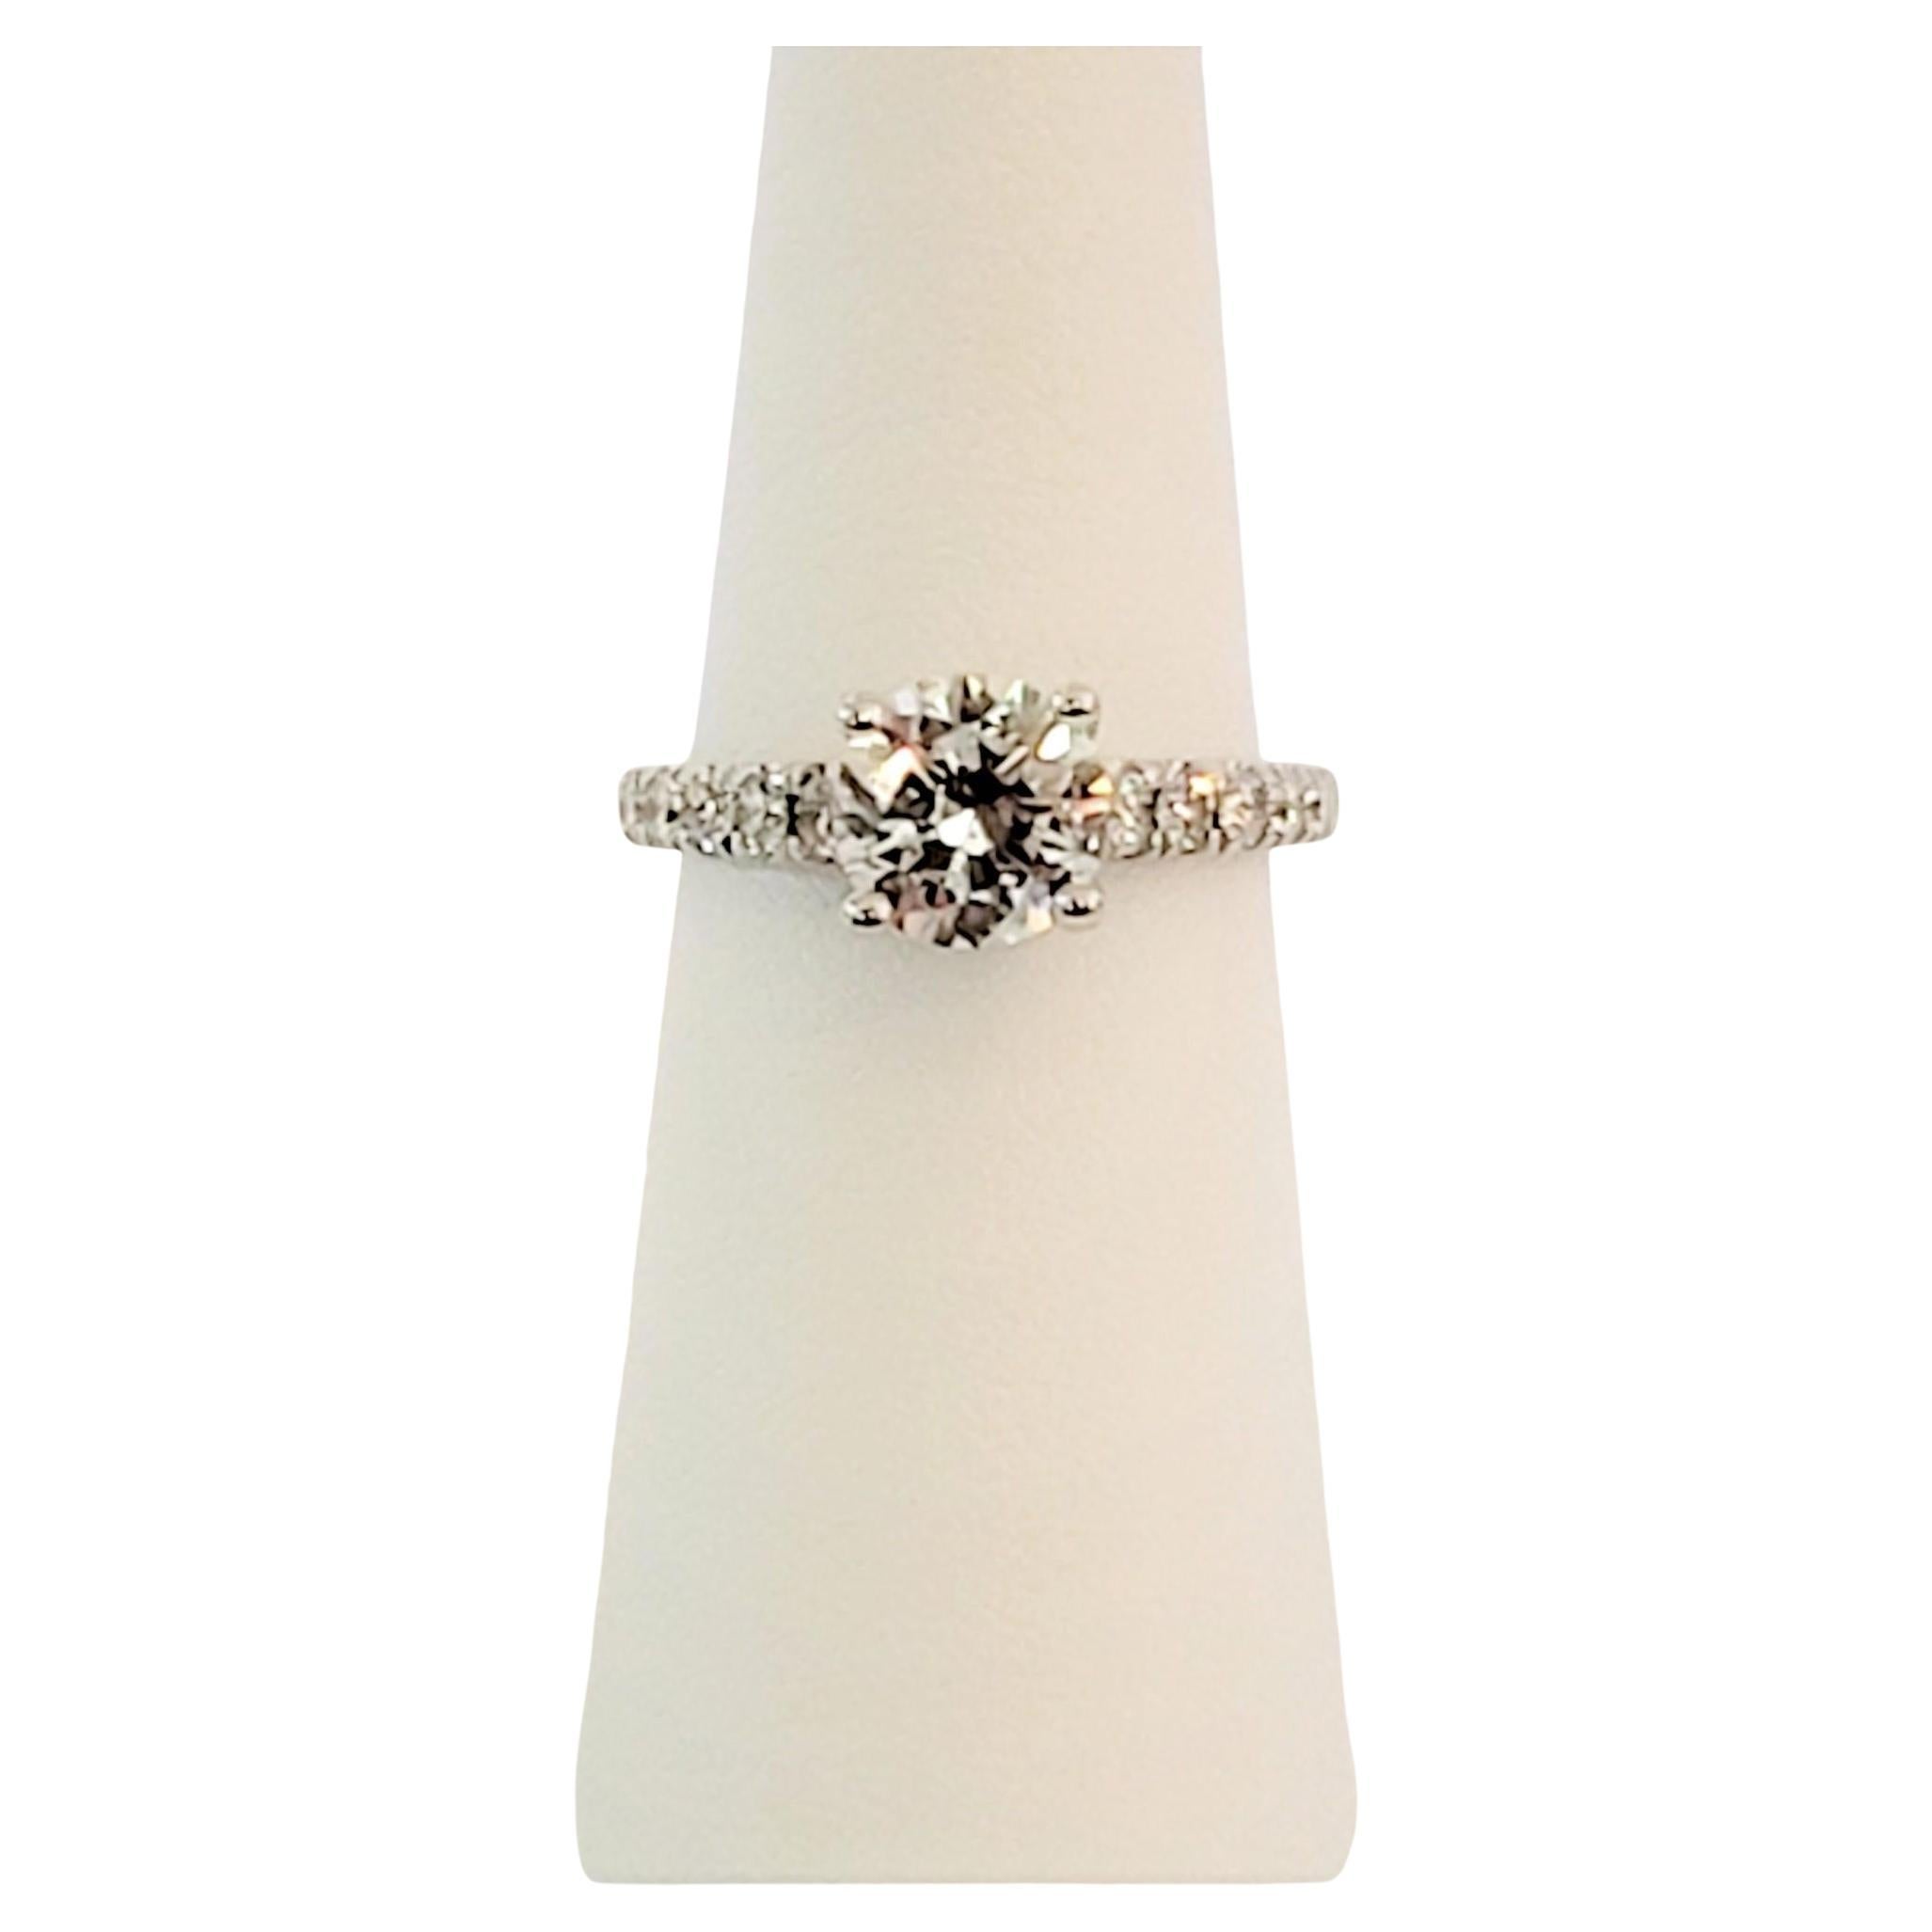 Vera Wang 14K White gold engagement ring with round brilliant diamond